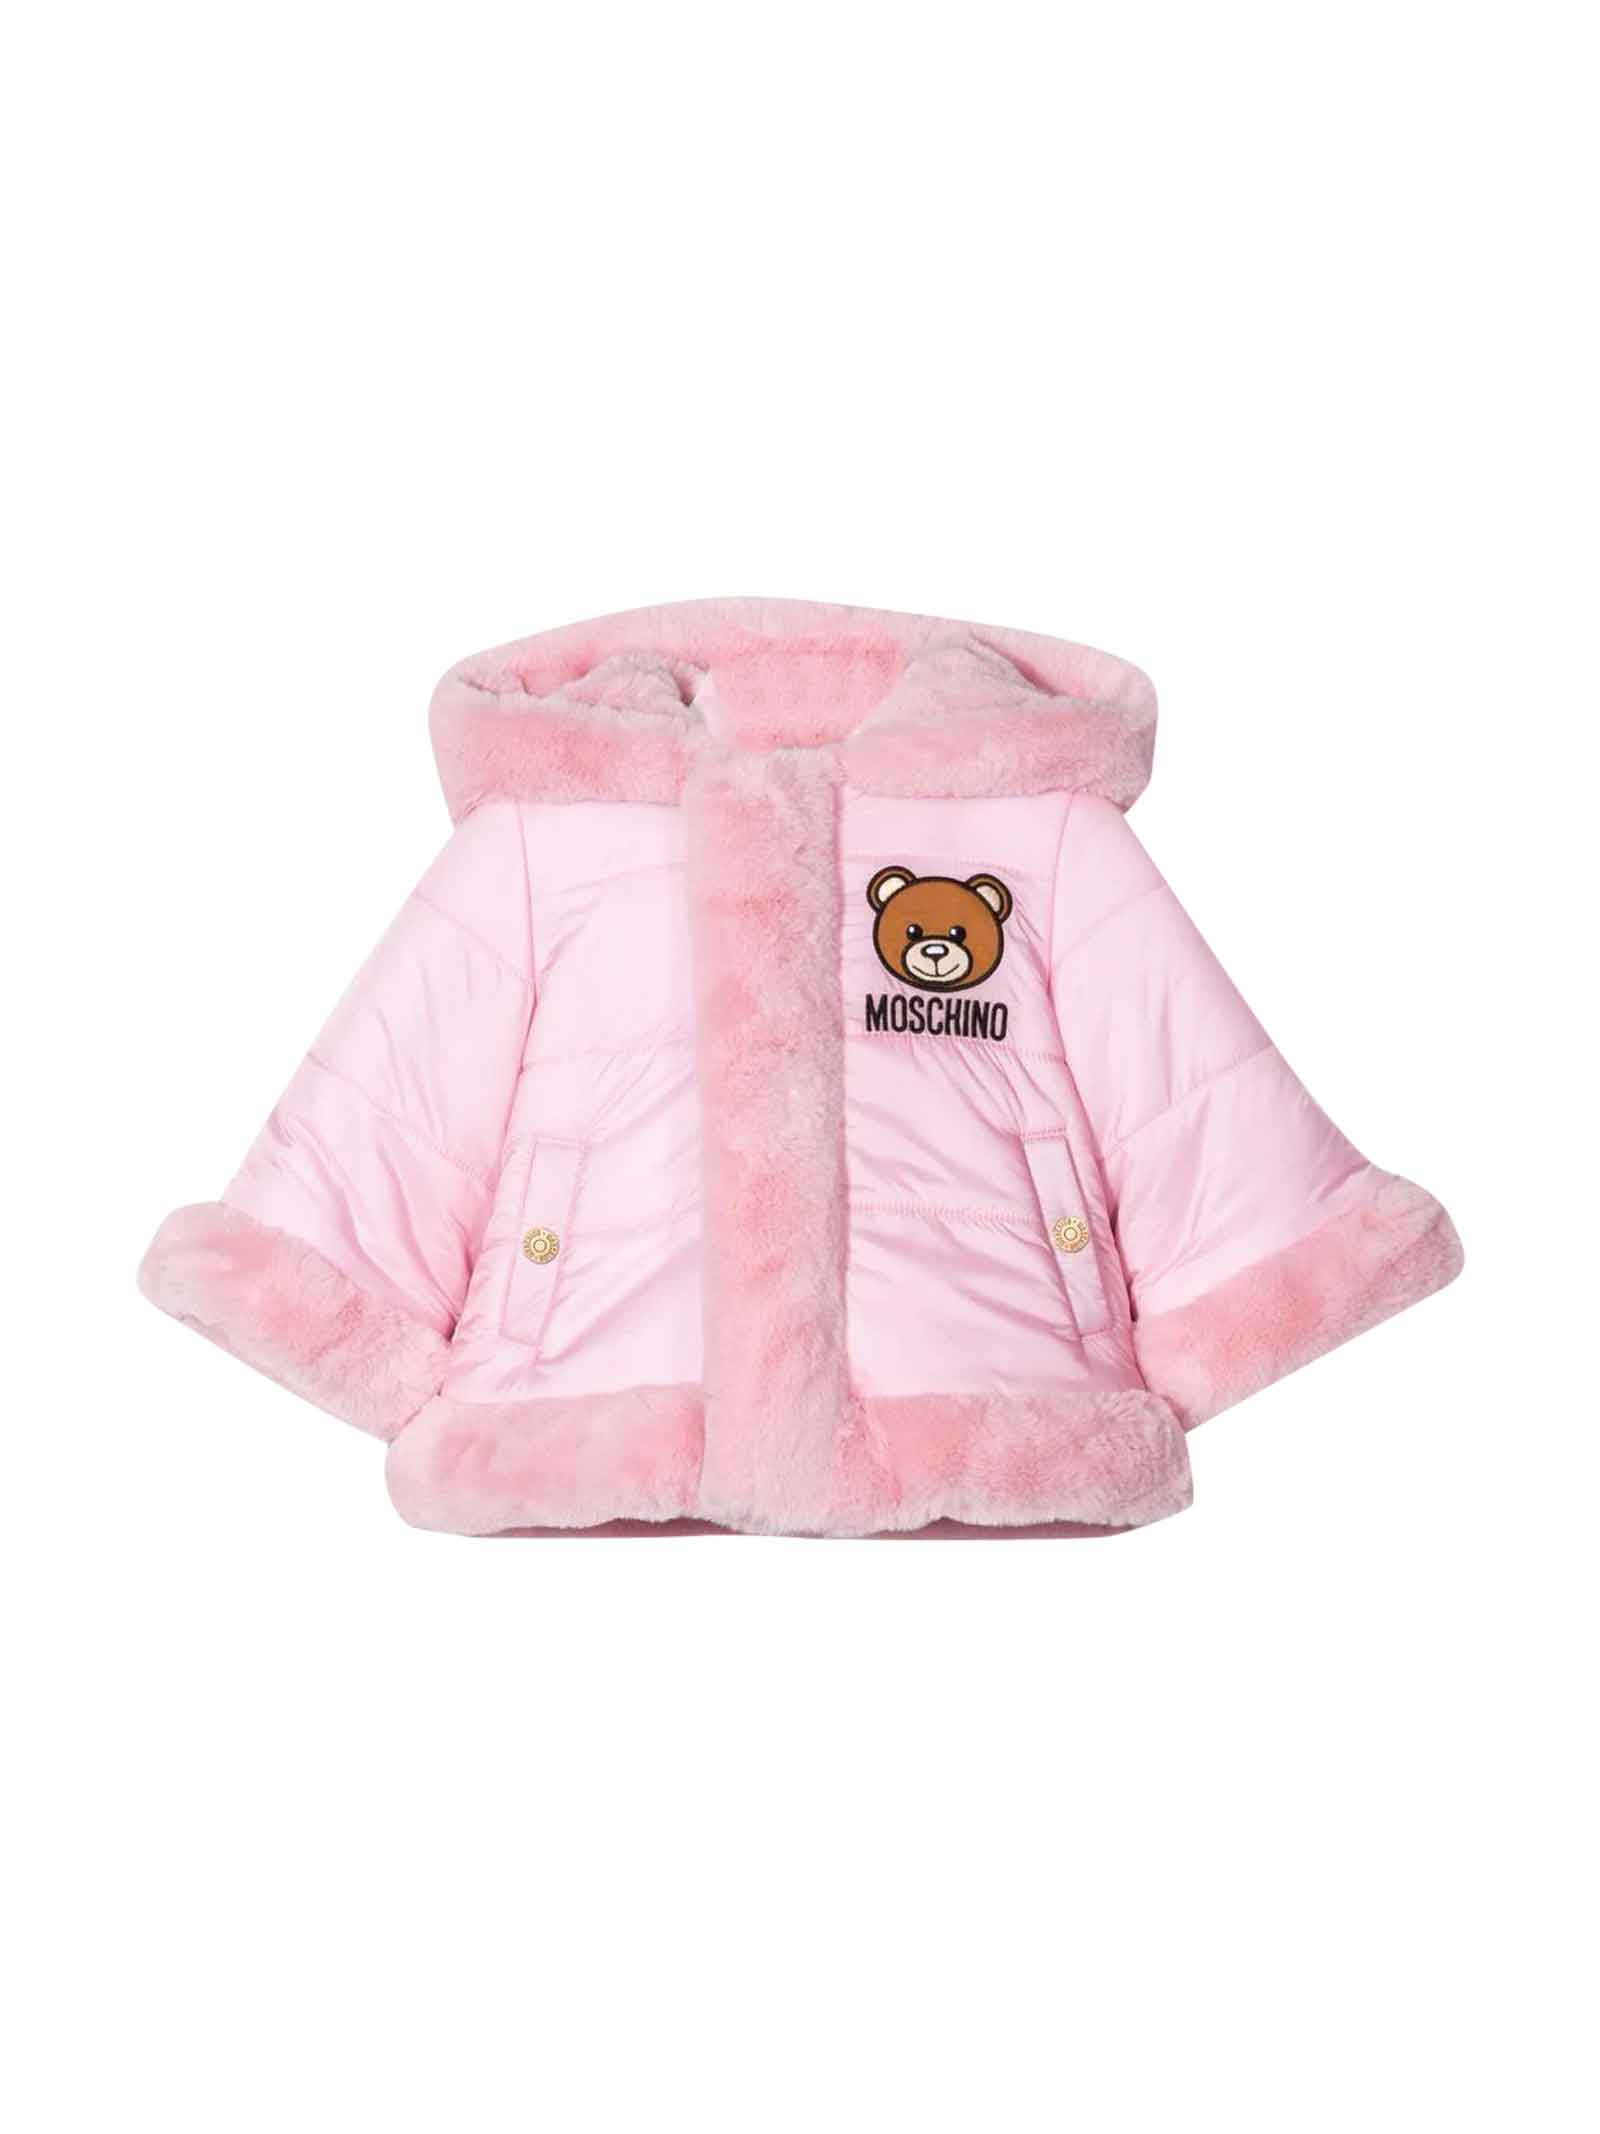 Moschino Pink Jacket Baby